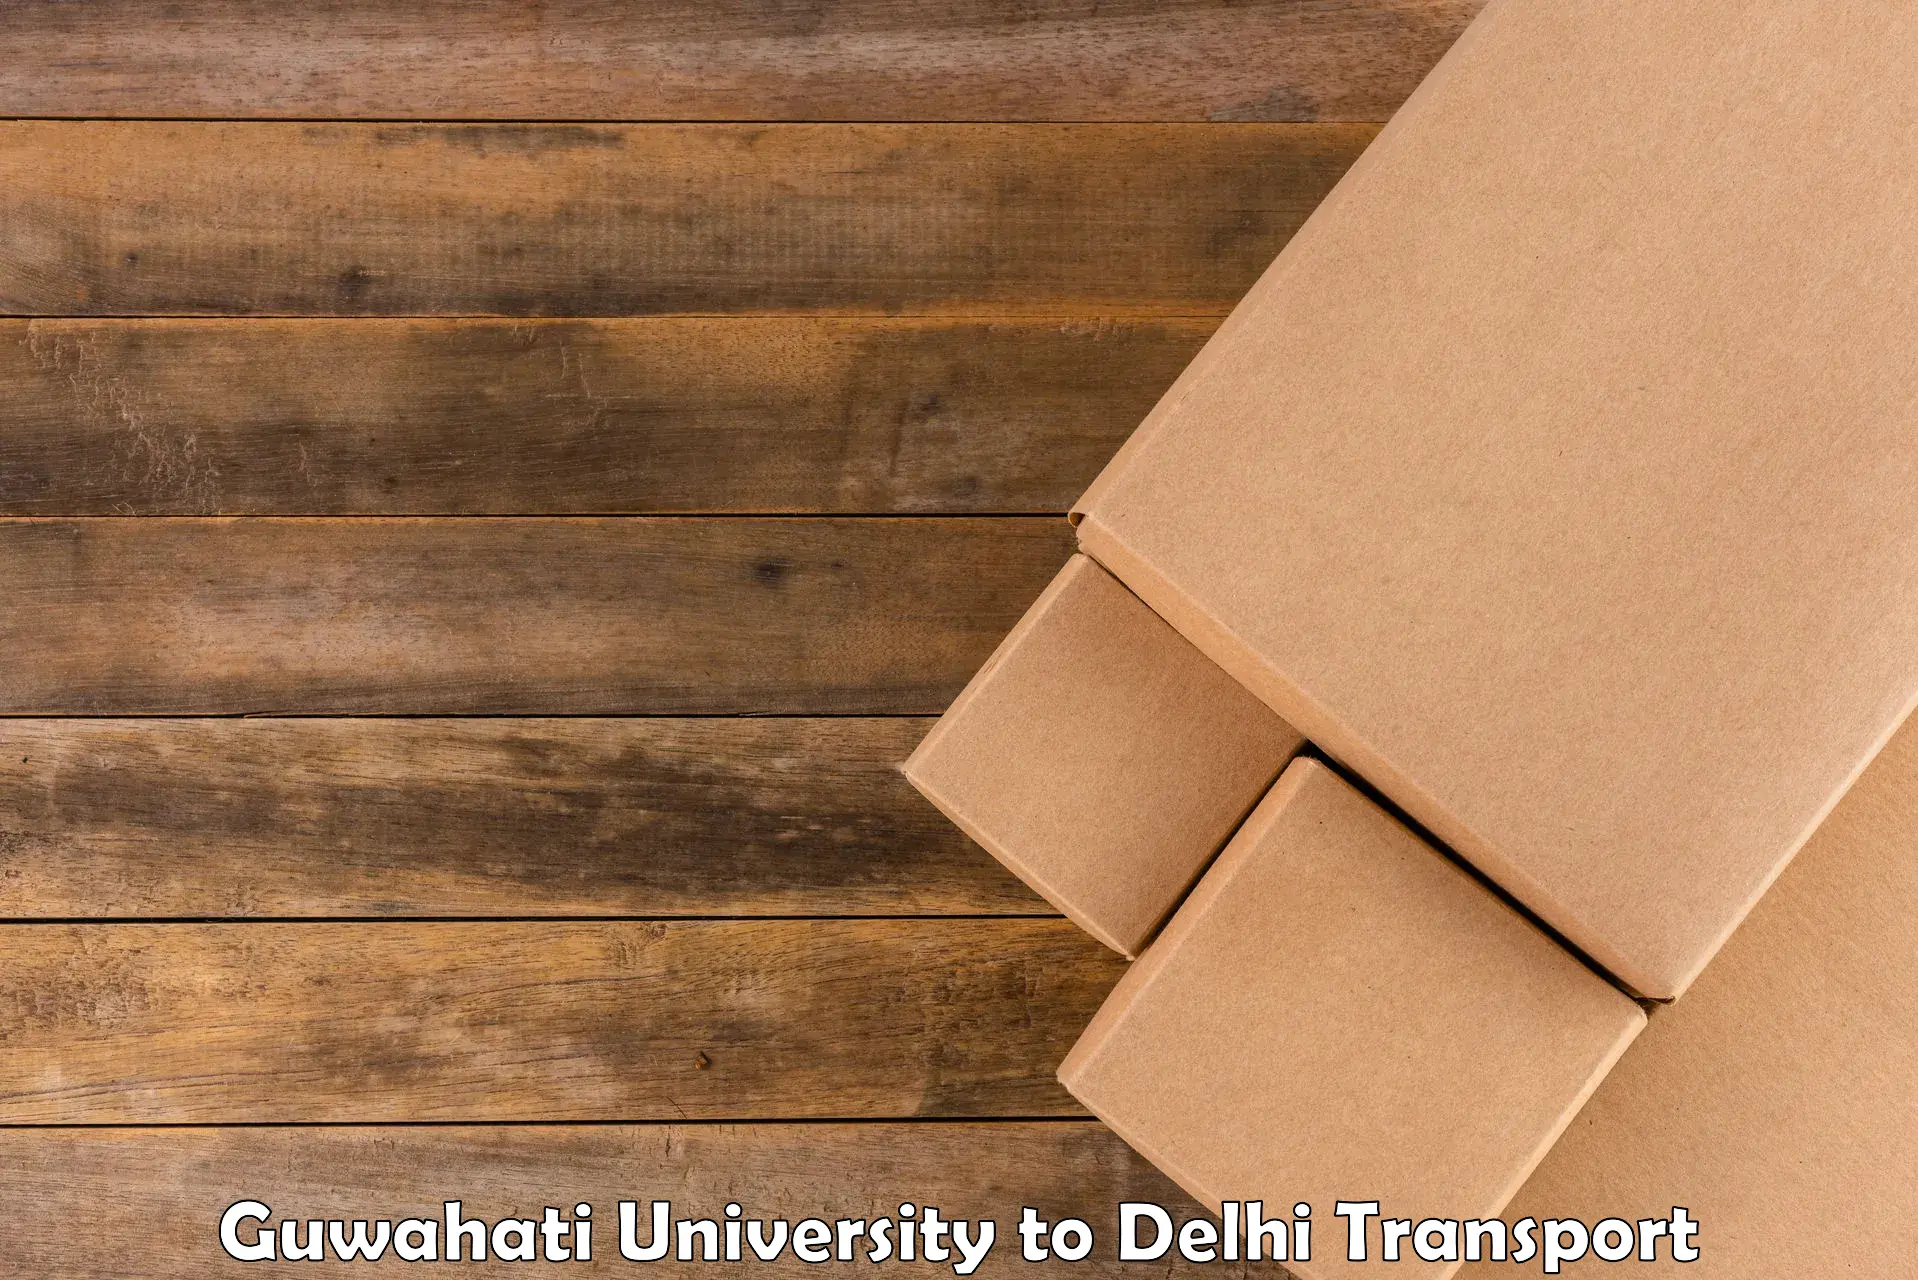 Daily parcel service transport Guwahati University to University of Delhi